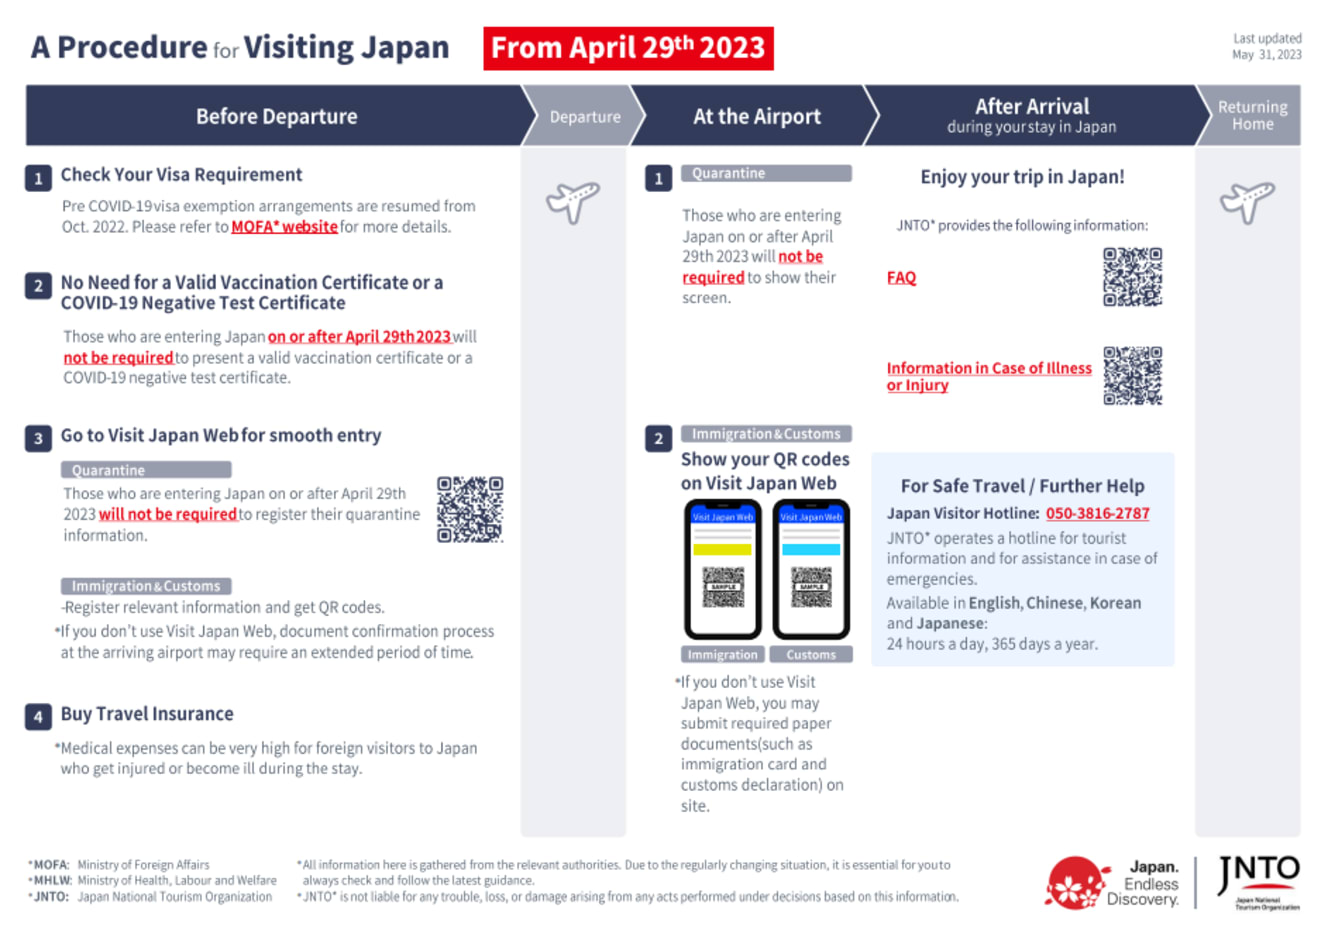 Vaccines for Japan Guide Travel Japan (Japan National Tourism Organization)